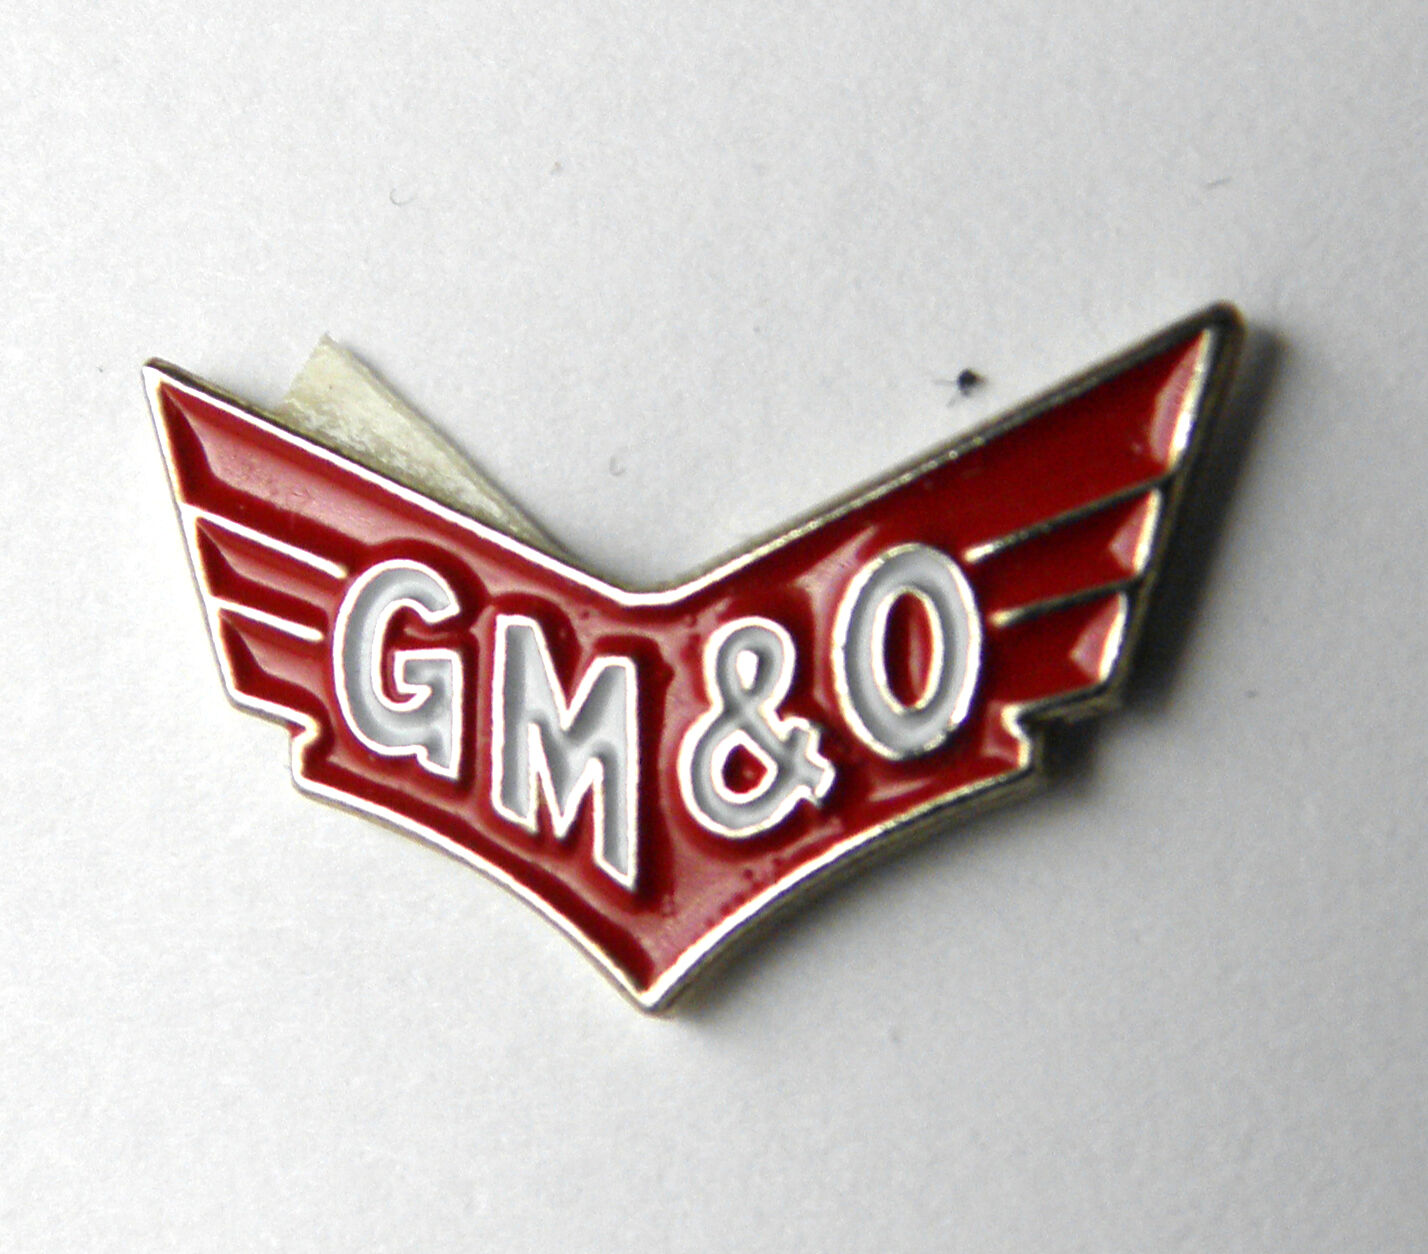 GM&O GM & O US RAIL RAILWAY GULF MOBILE OHIO RAILROAD LAPEL PIN BADGE 1/2 INCH